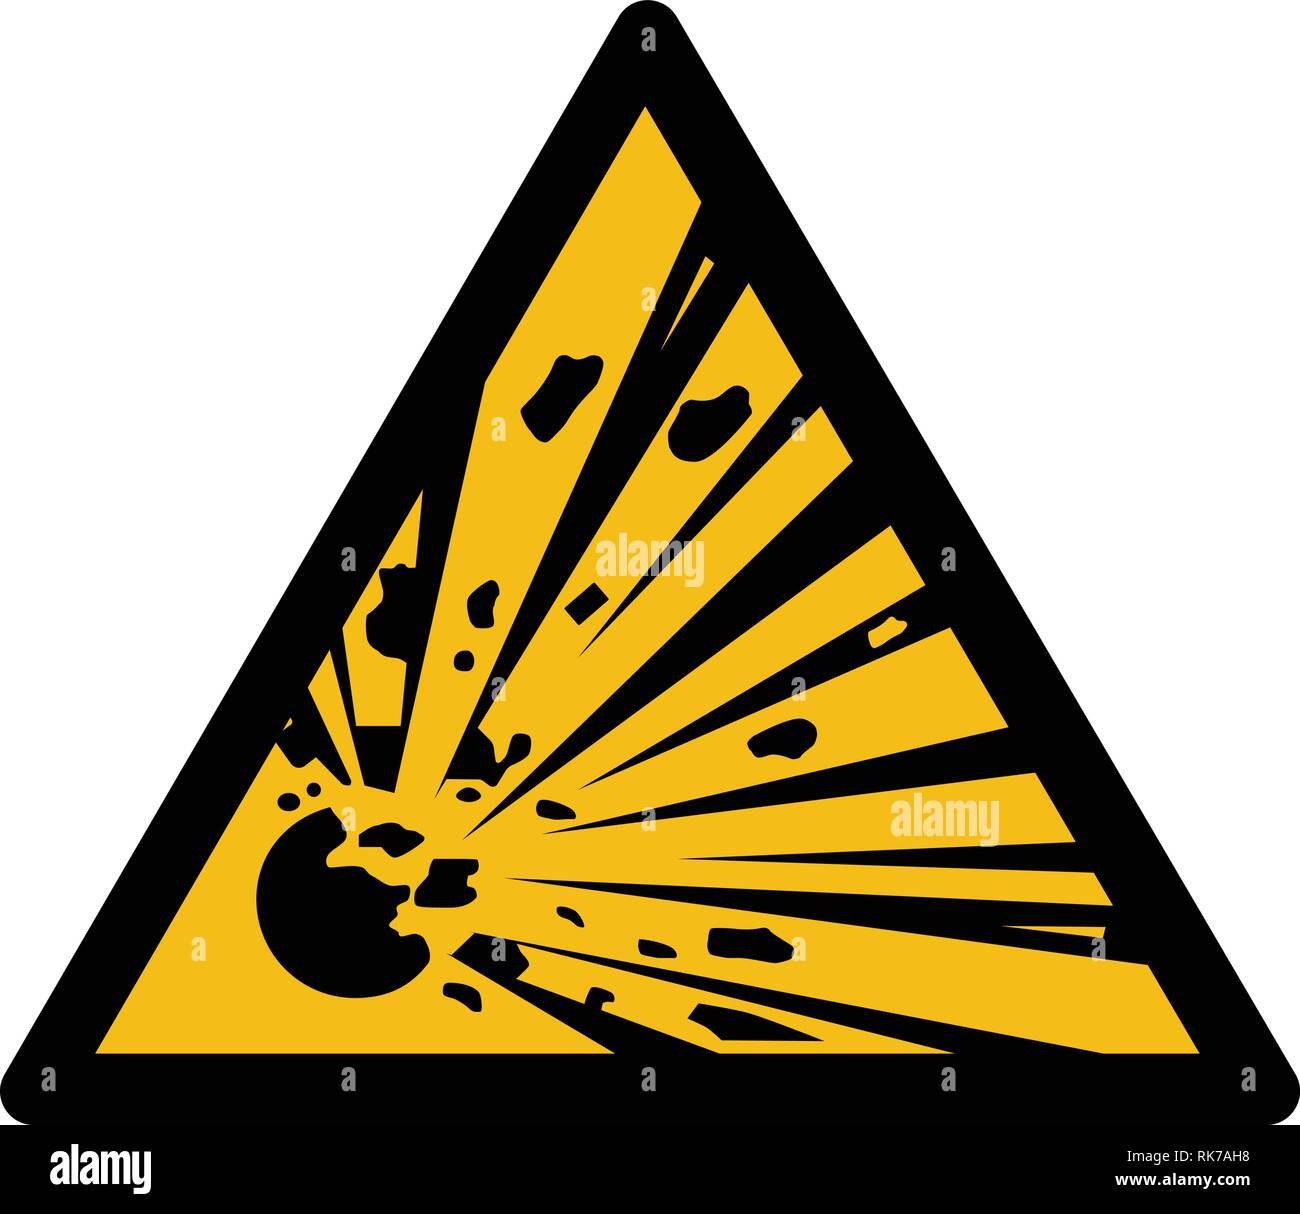 Gelbe dreieckige Vektor schild Warnung vor explosiven Material Stock Vektor